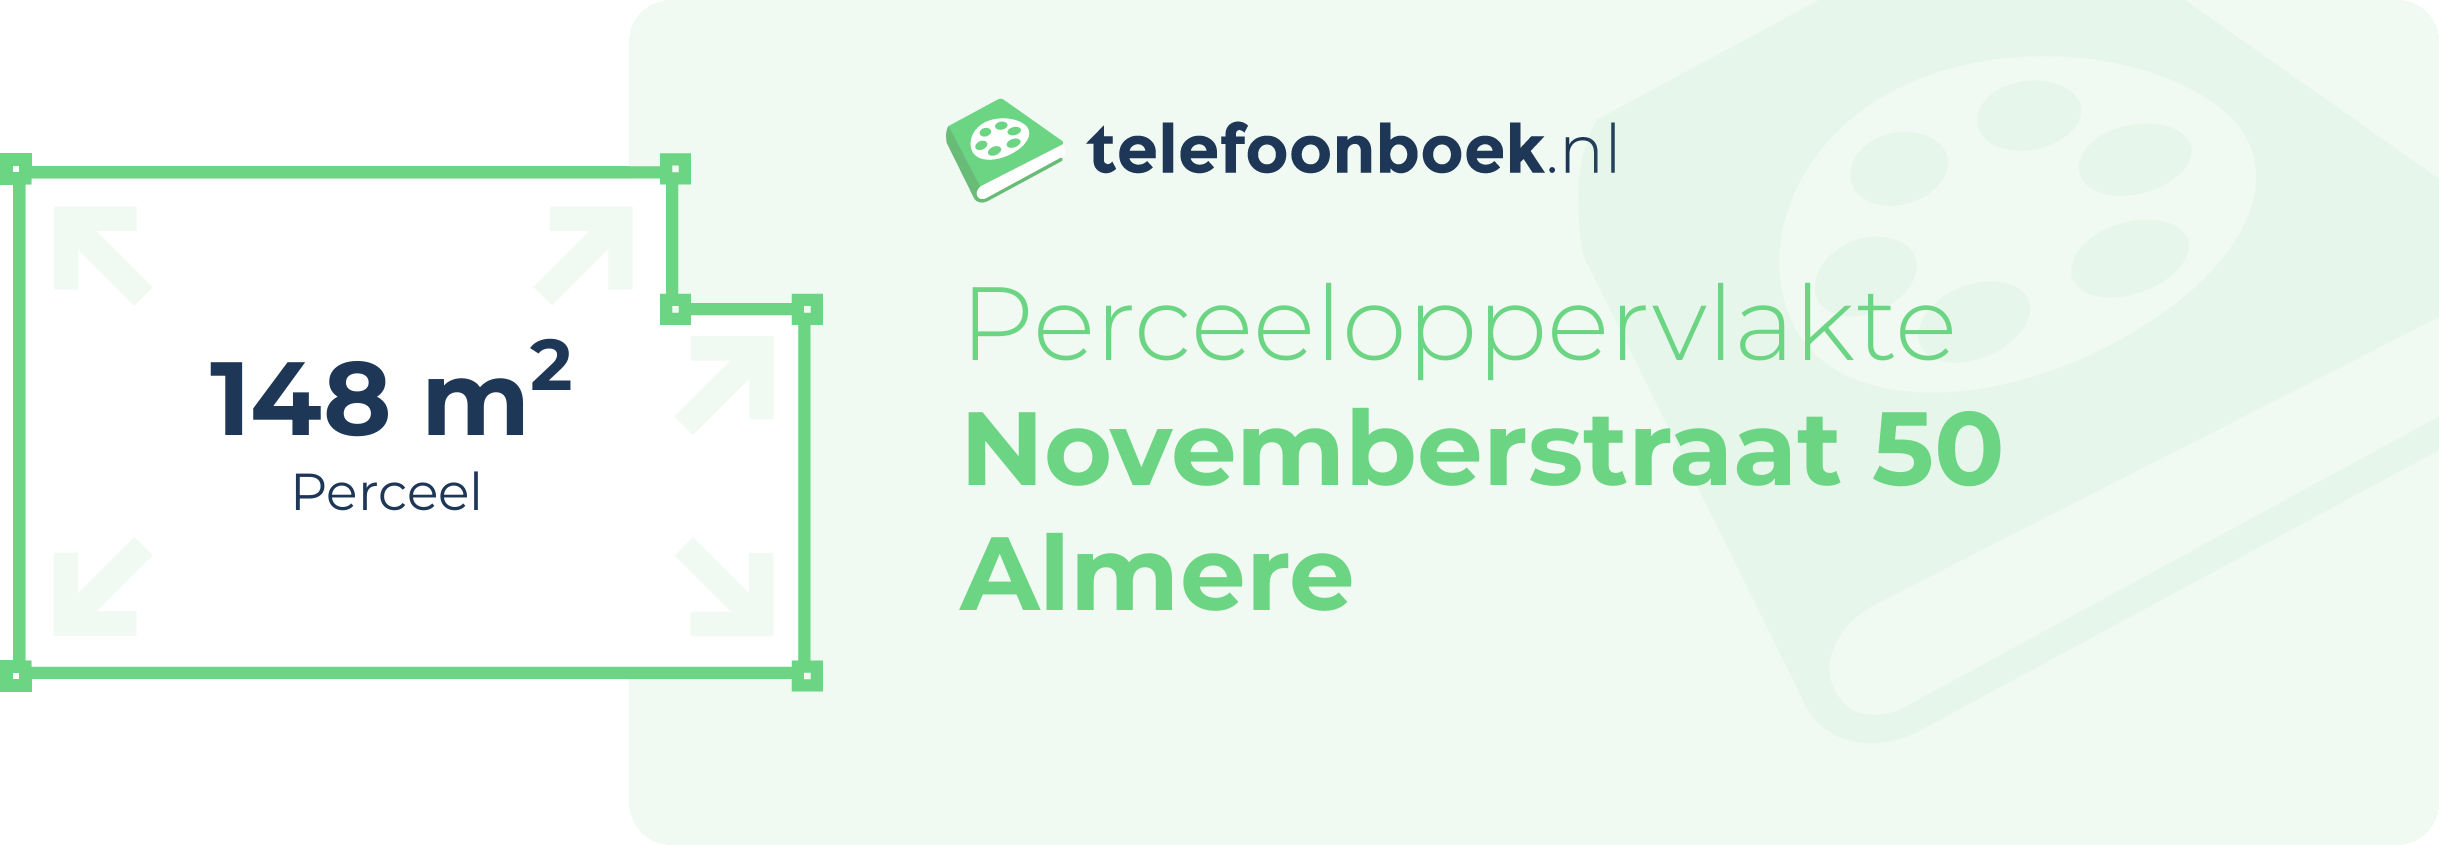 Perceeloppervlakte Novemberstraat 50 Almere